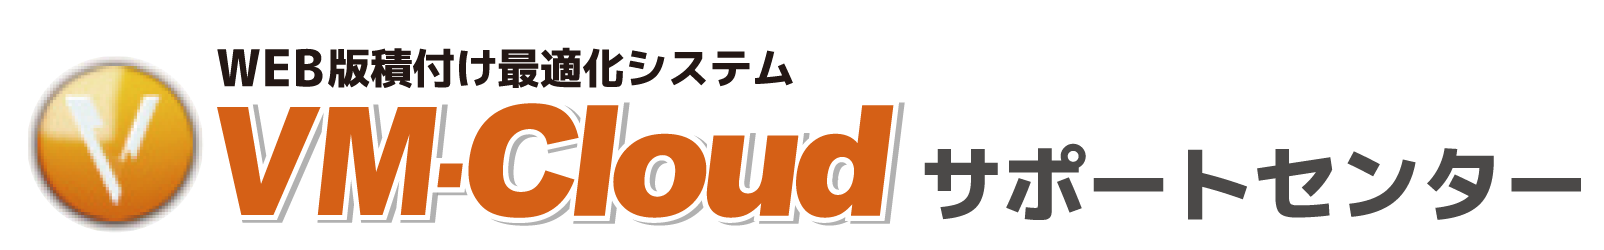 vm-cloud